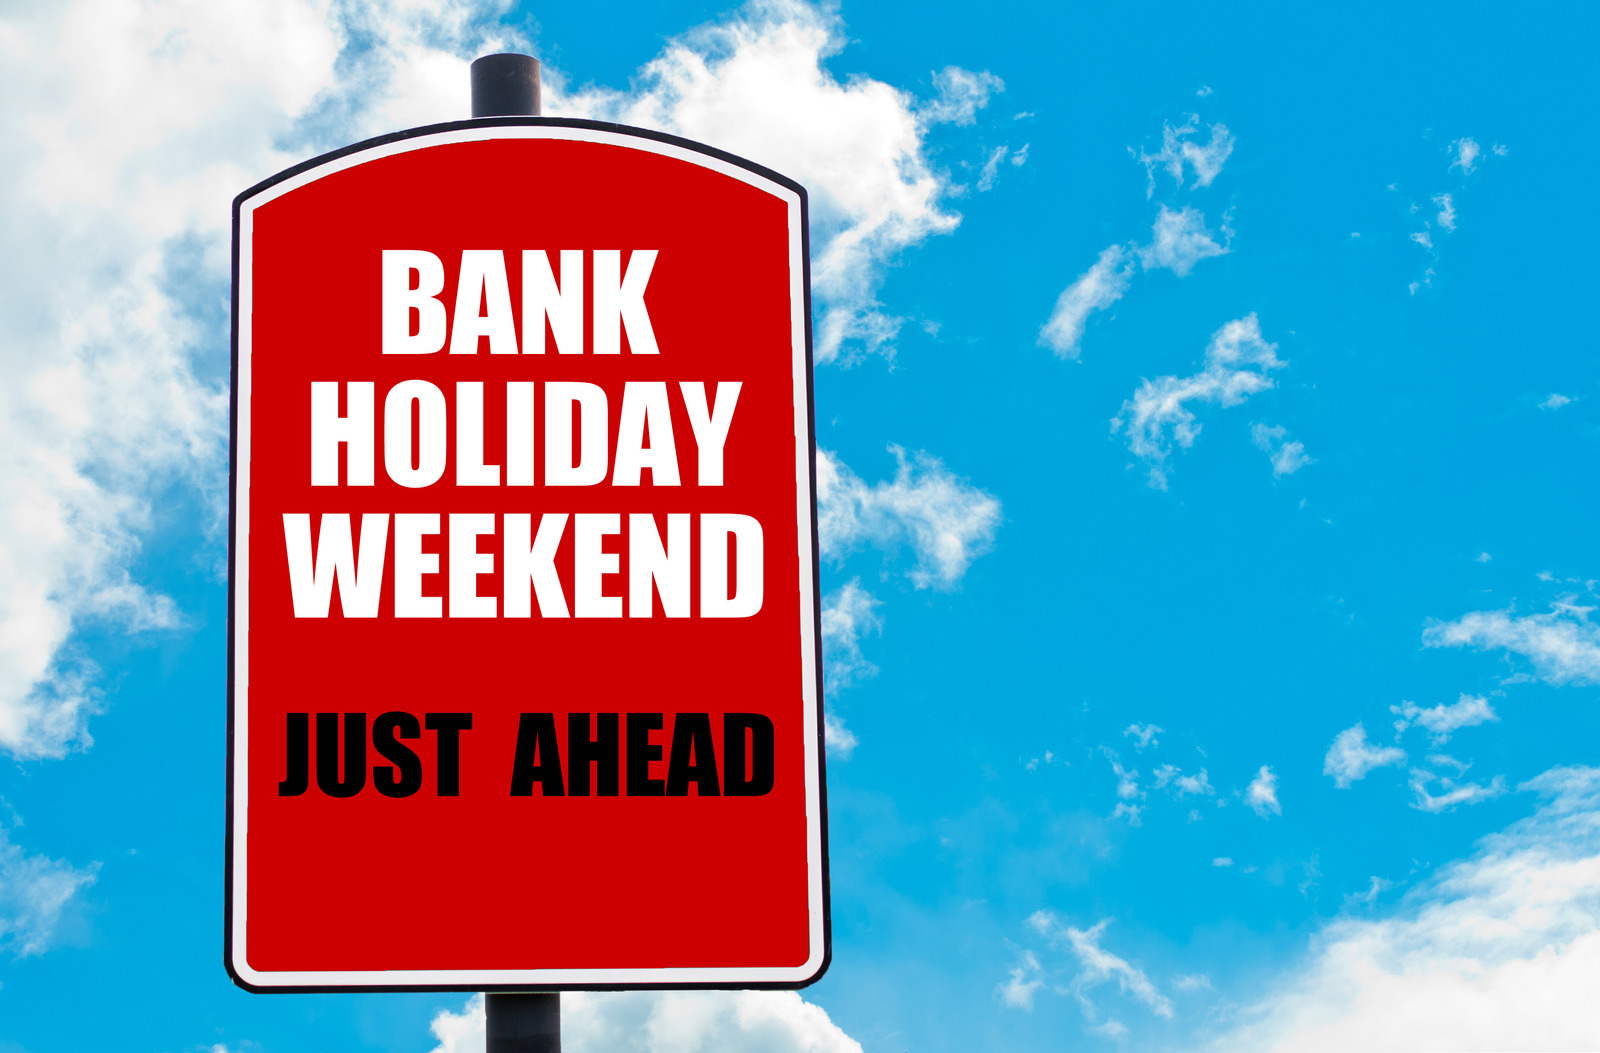 Happy bank holiday weekend!